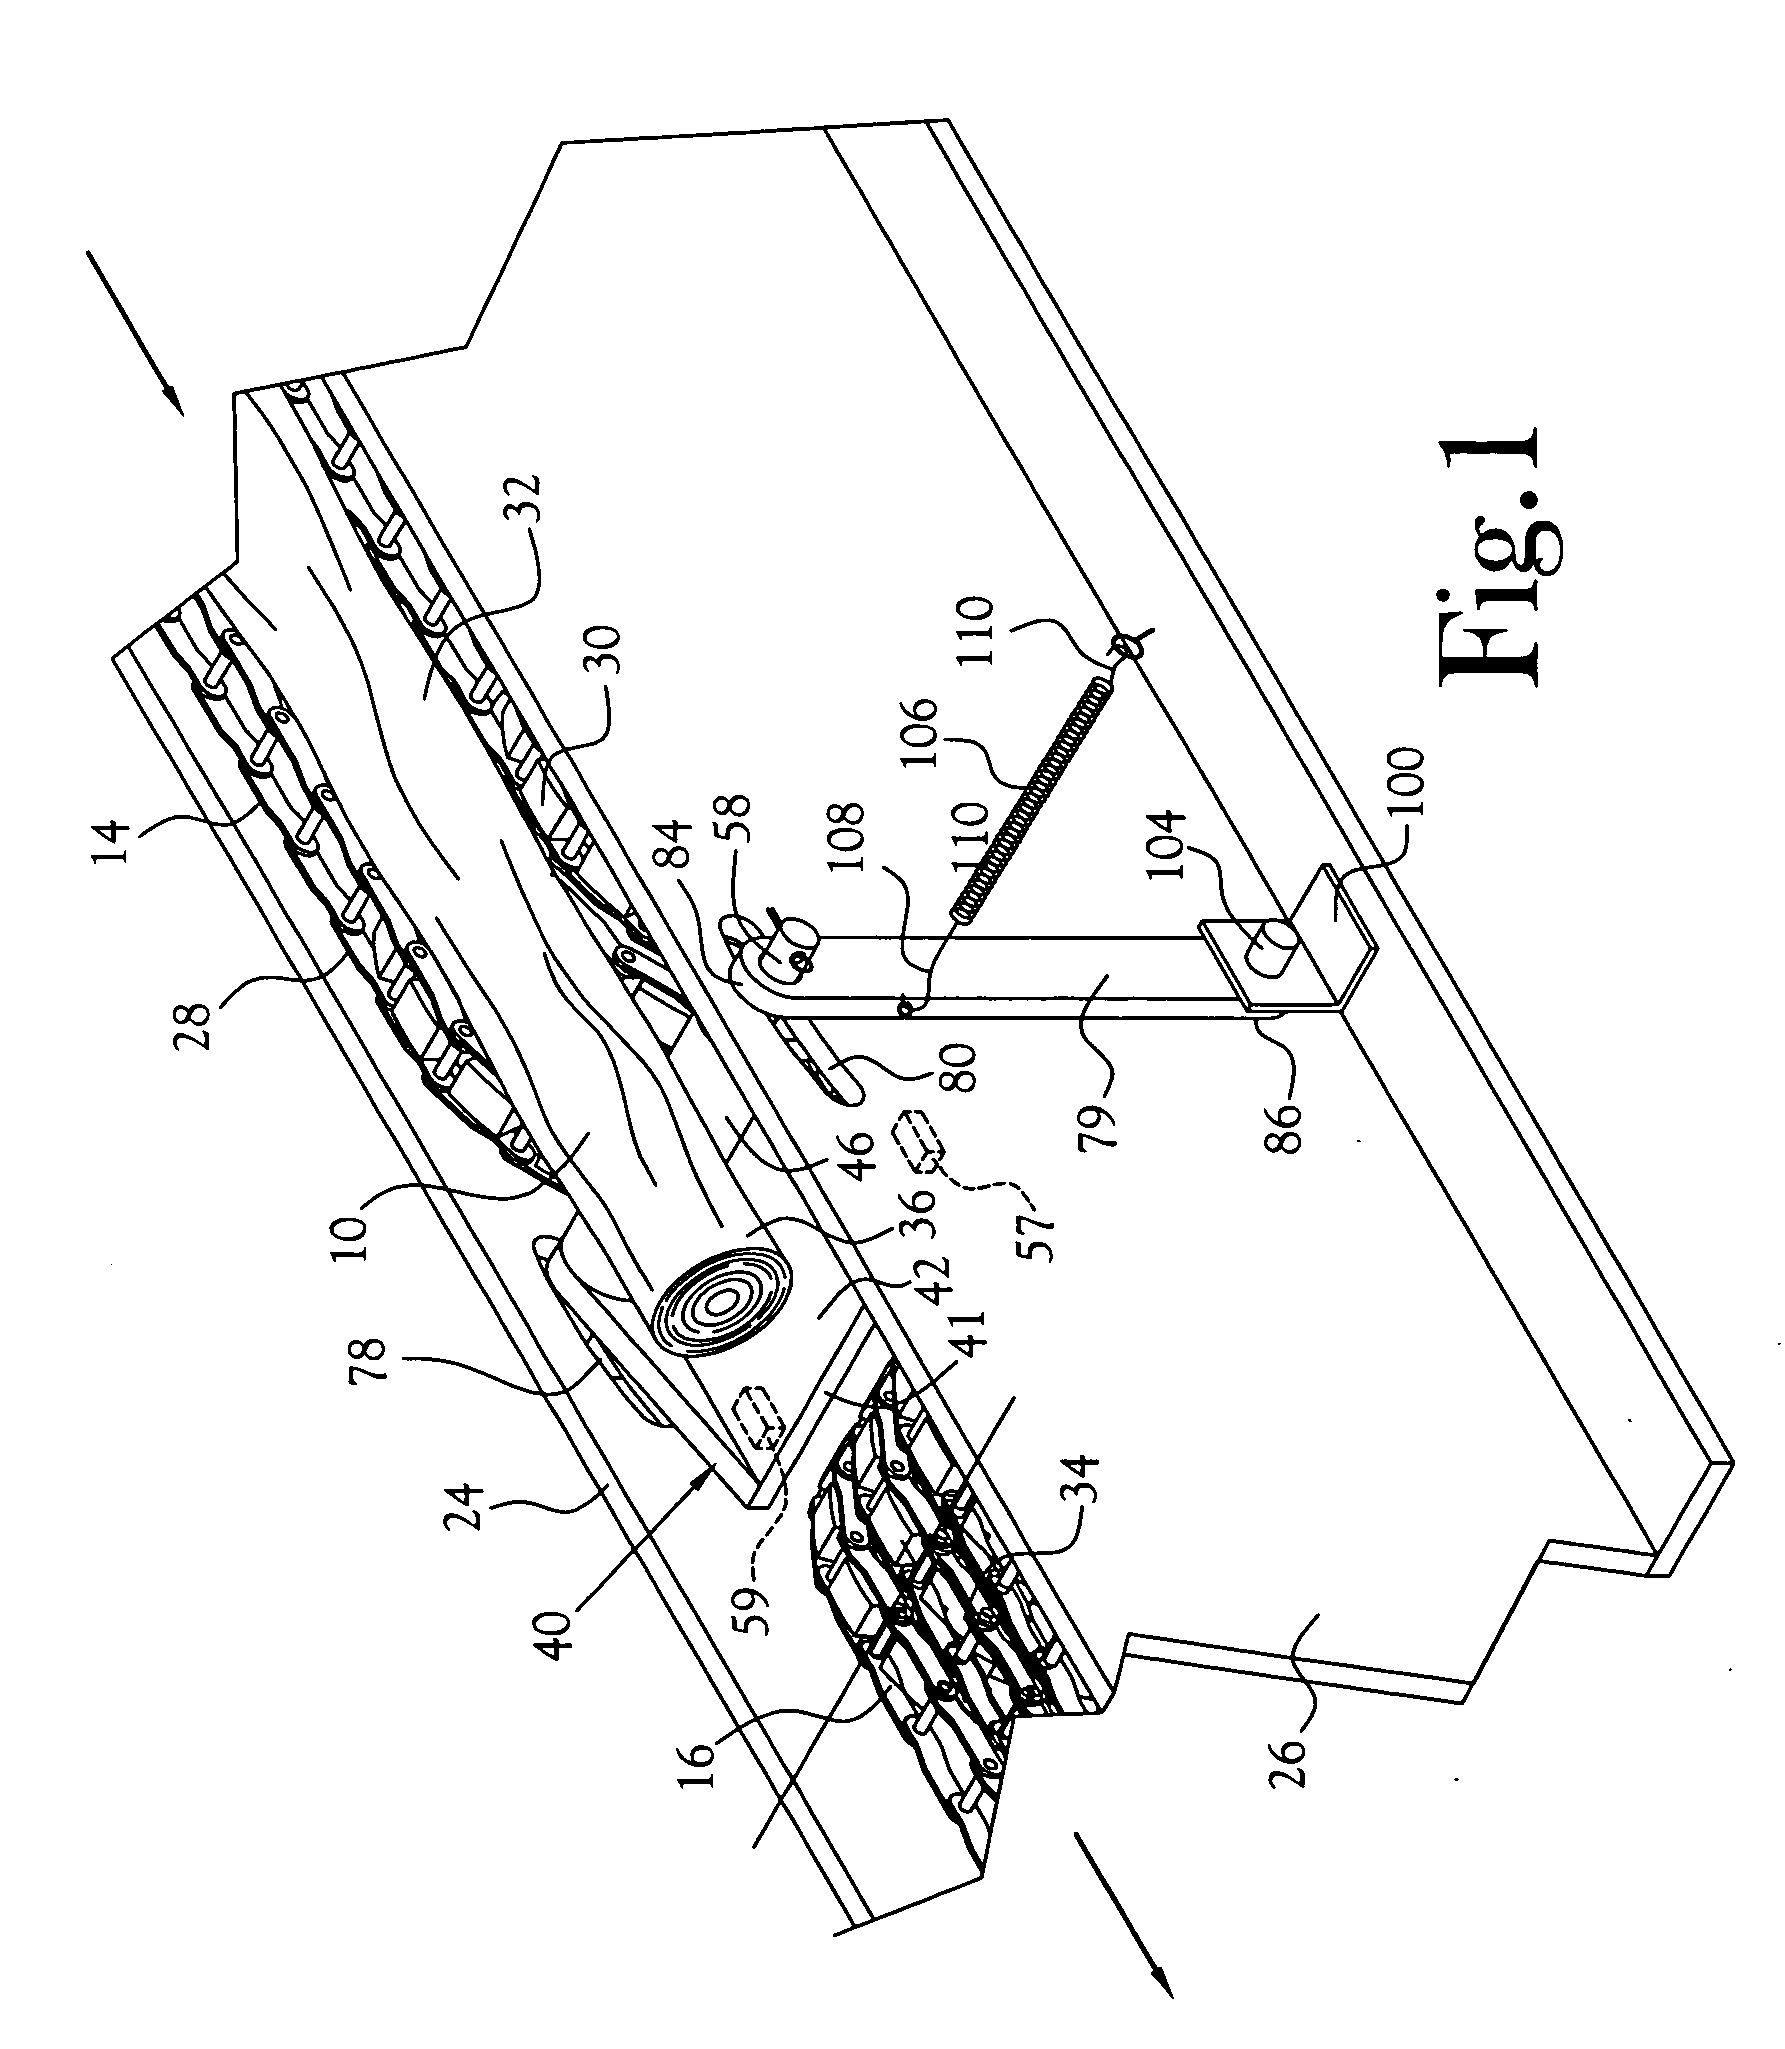 Automatic conveyor slot closure